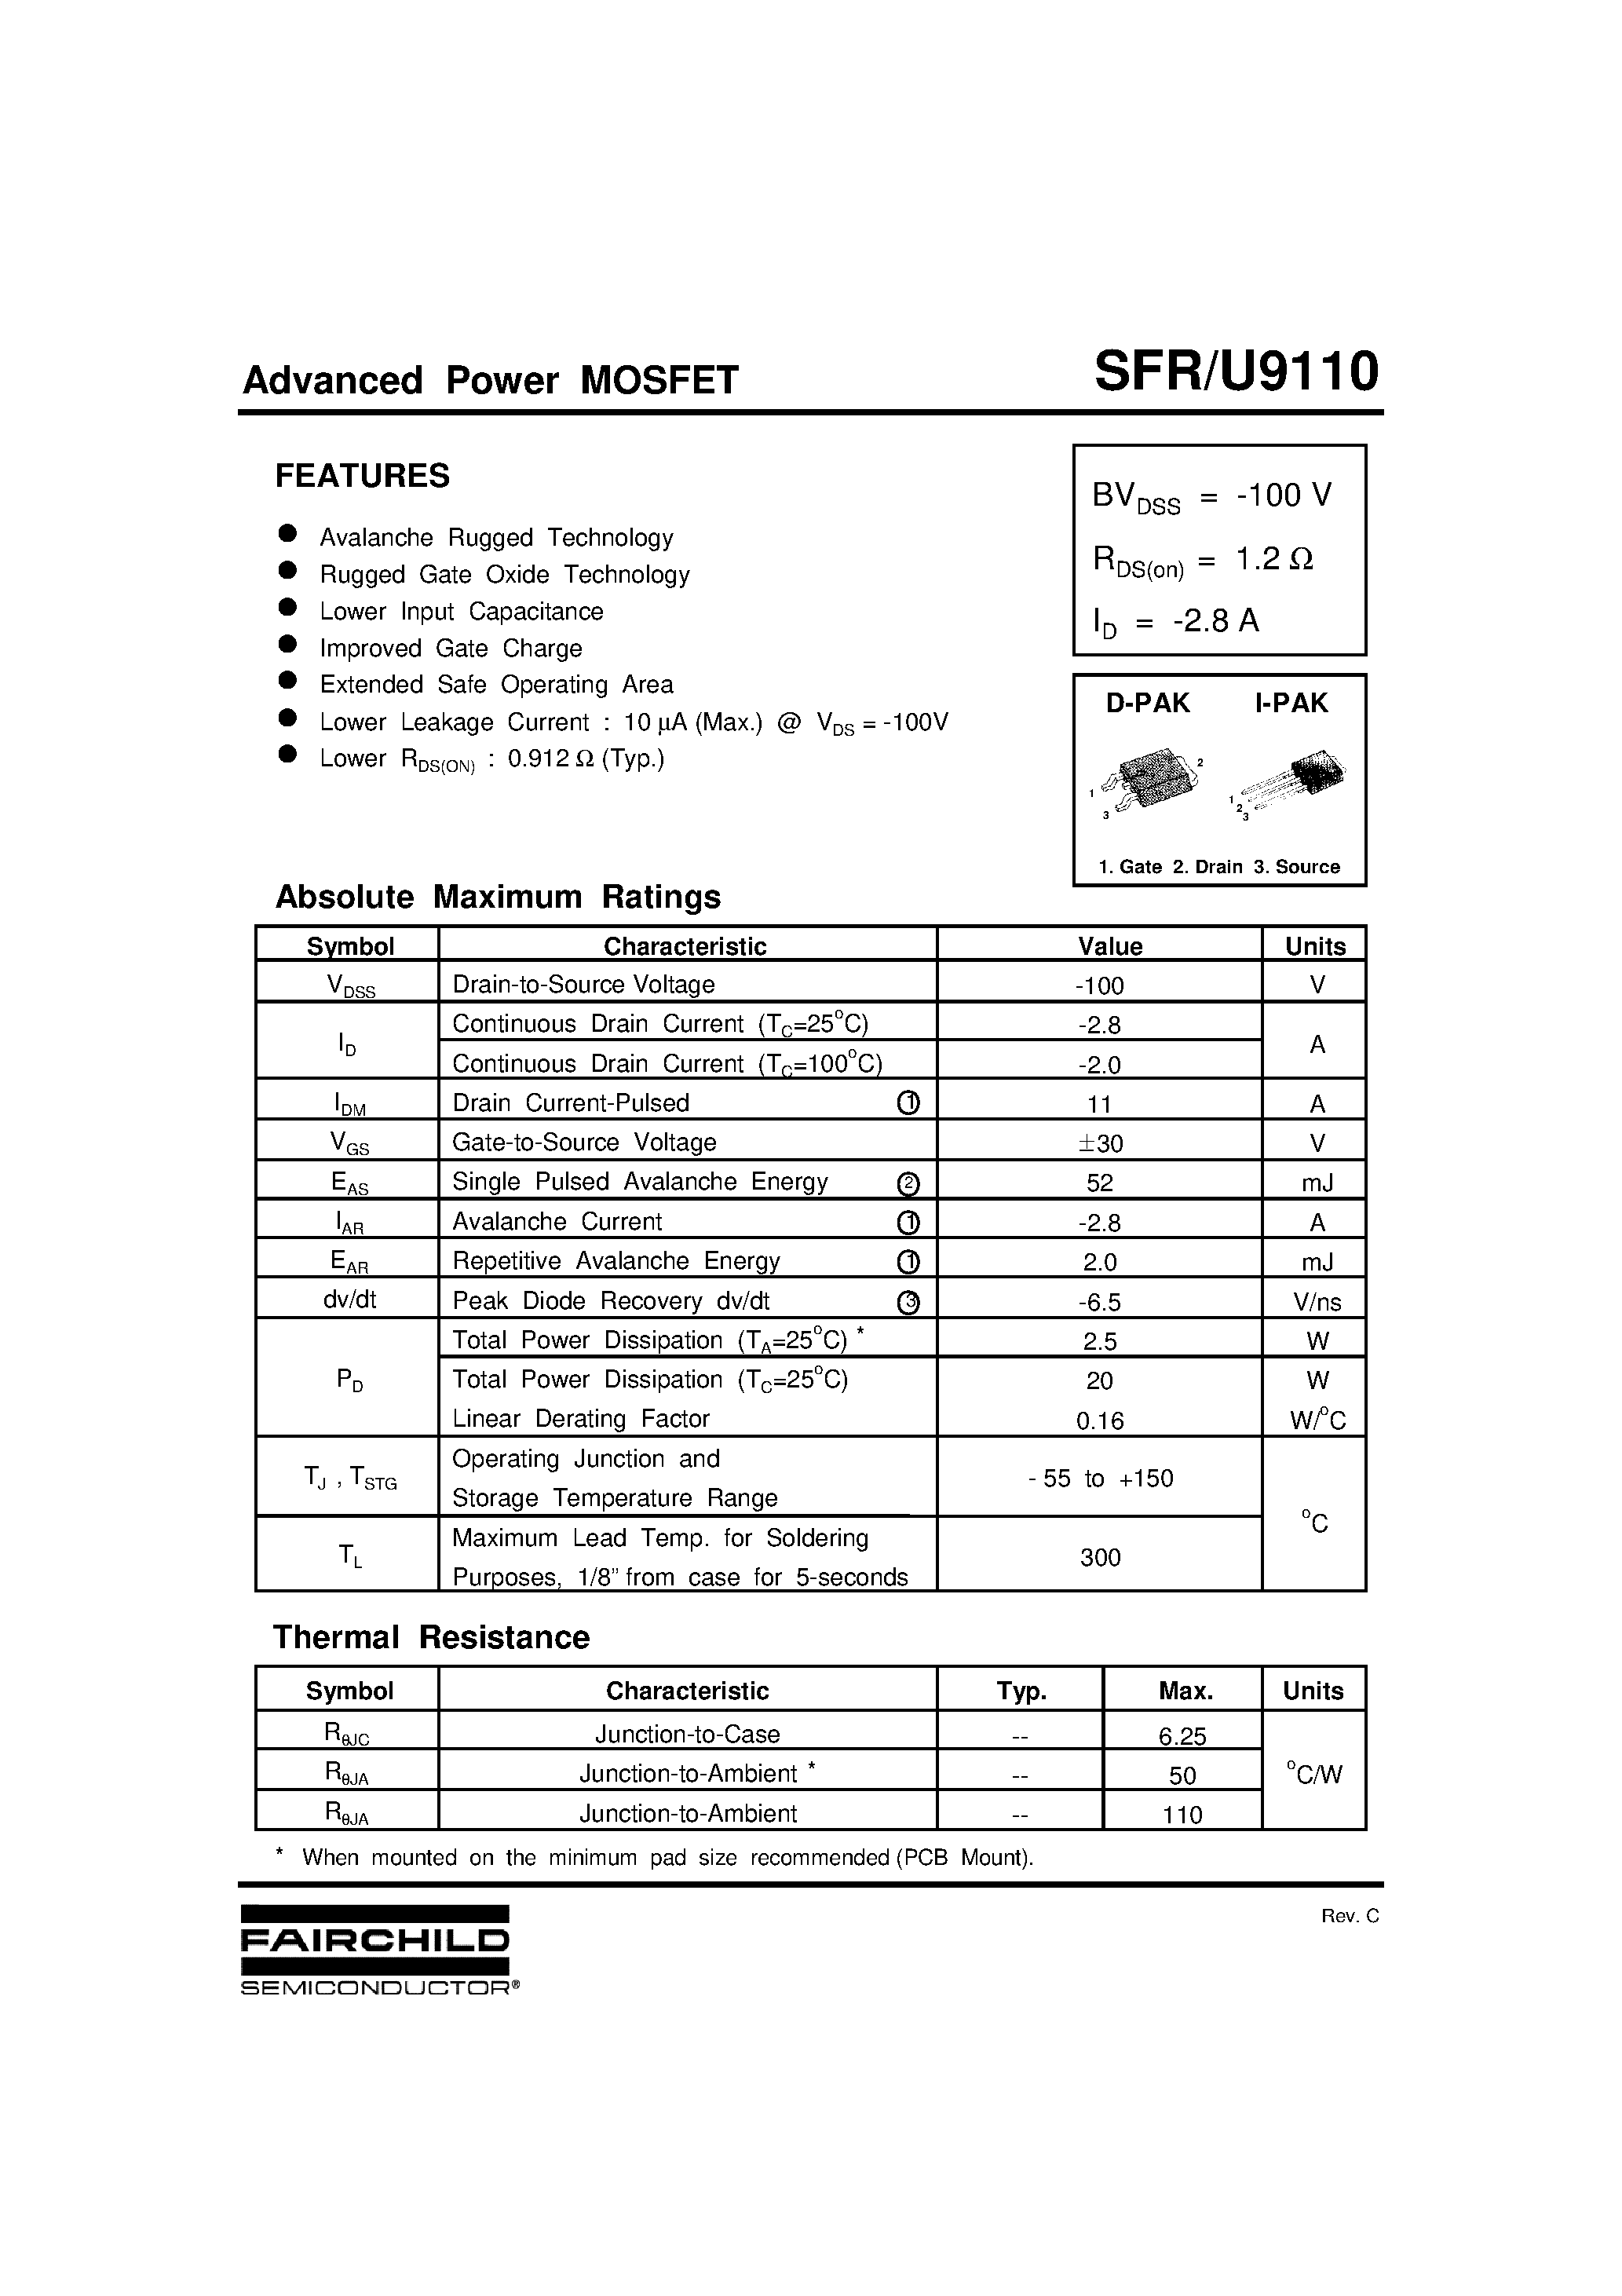 Datasheet SFRU9110 - Advanced Power MOSFET page 1